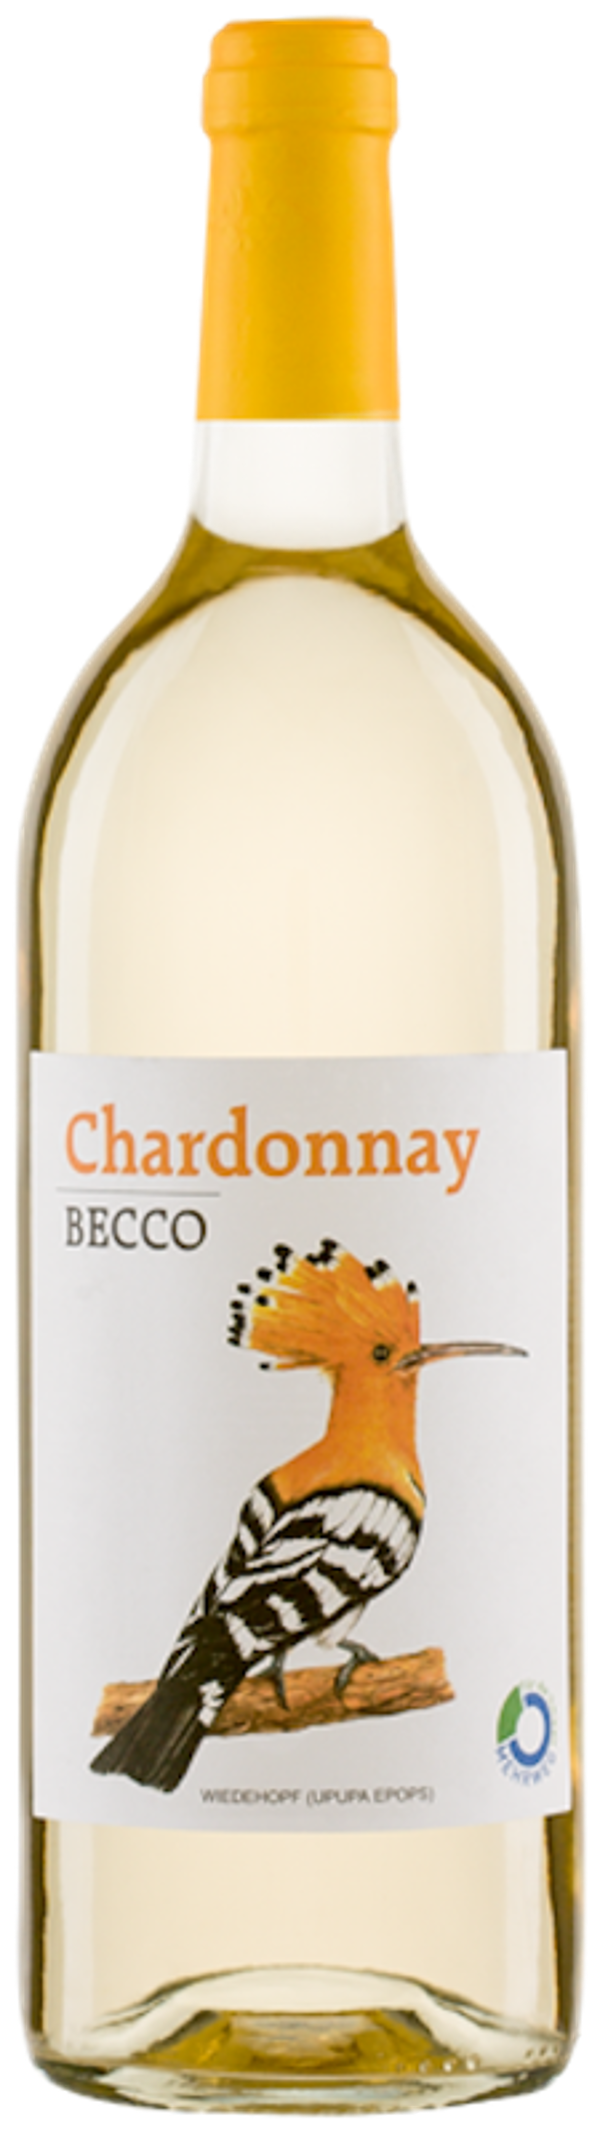 Produktfoto zu Kiste BECCO Chardonnay 6*1l